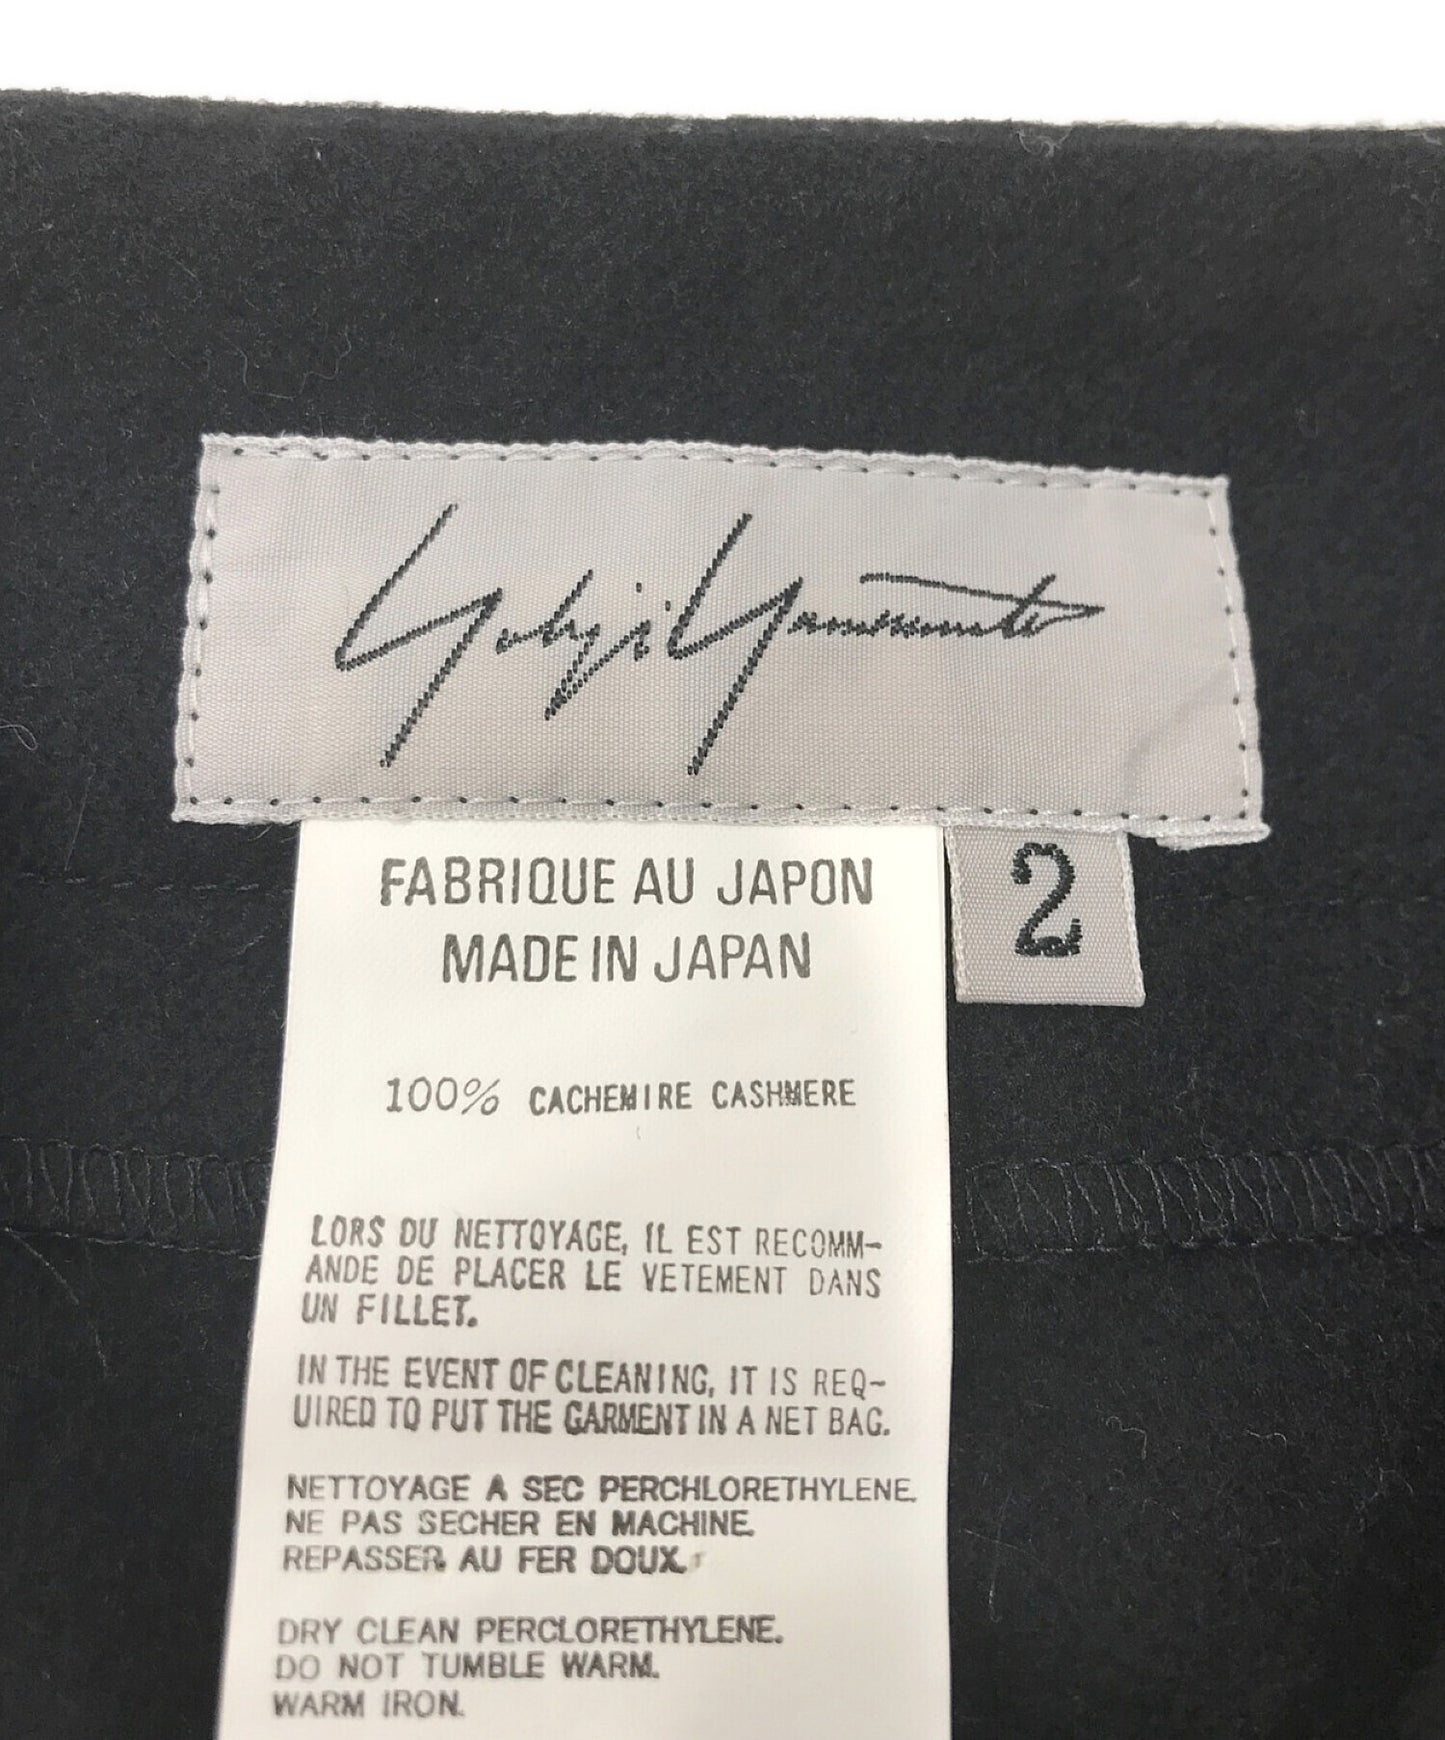 Yohji Yamamoto Cashmere Skirt Fu-S29-186